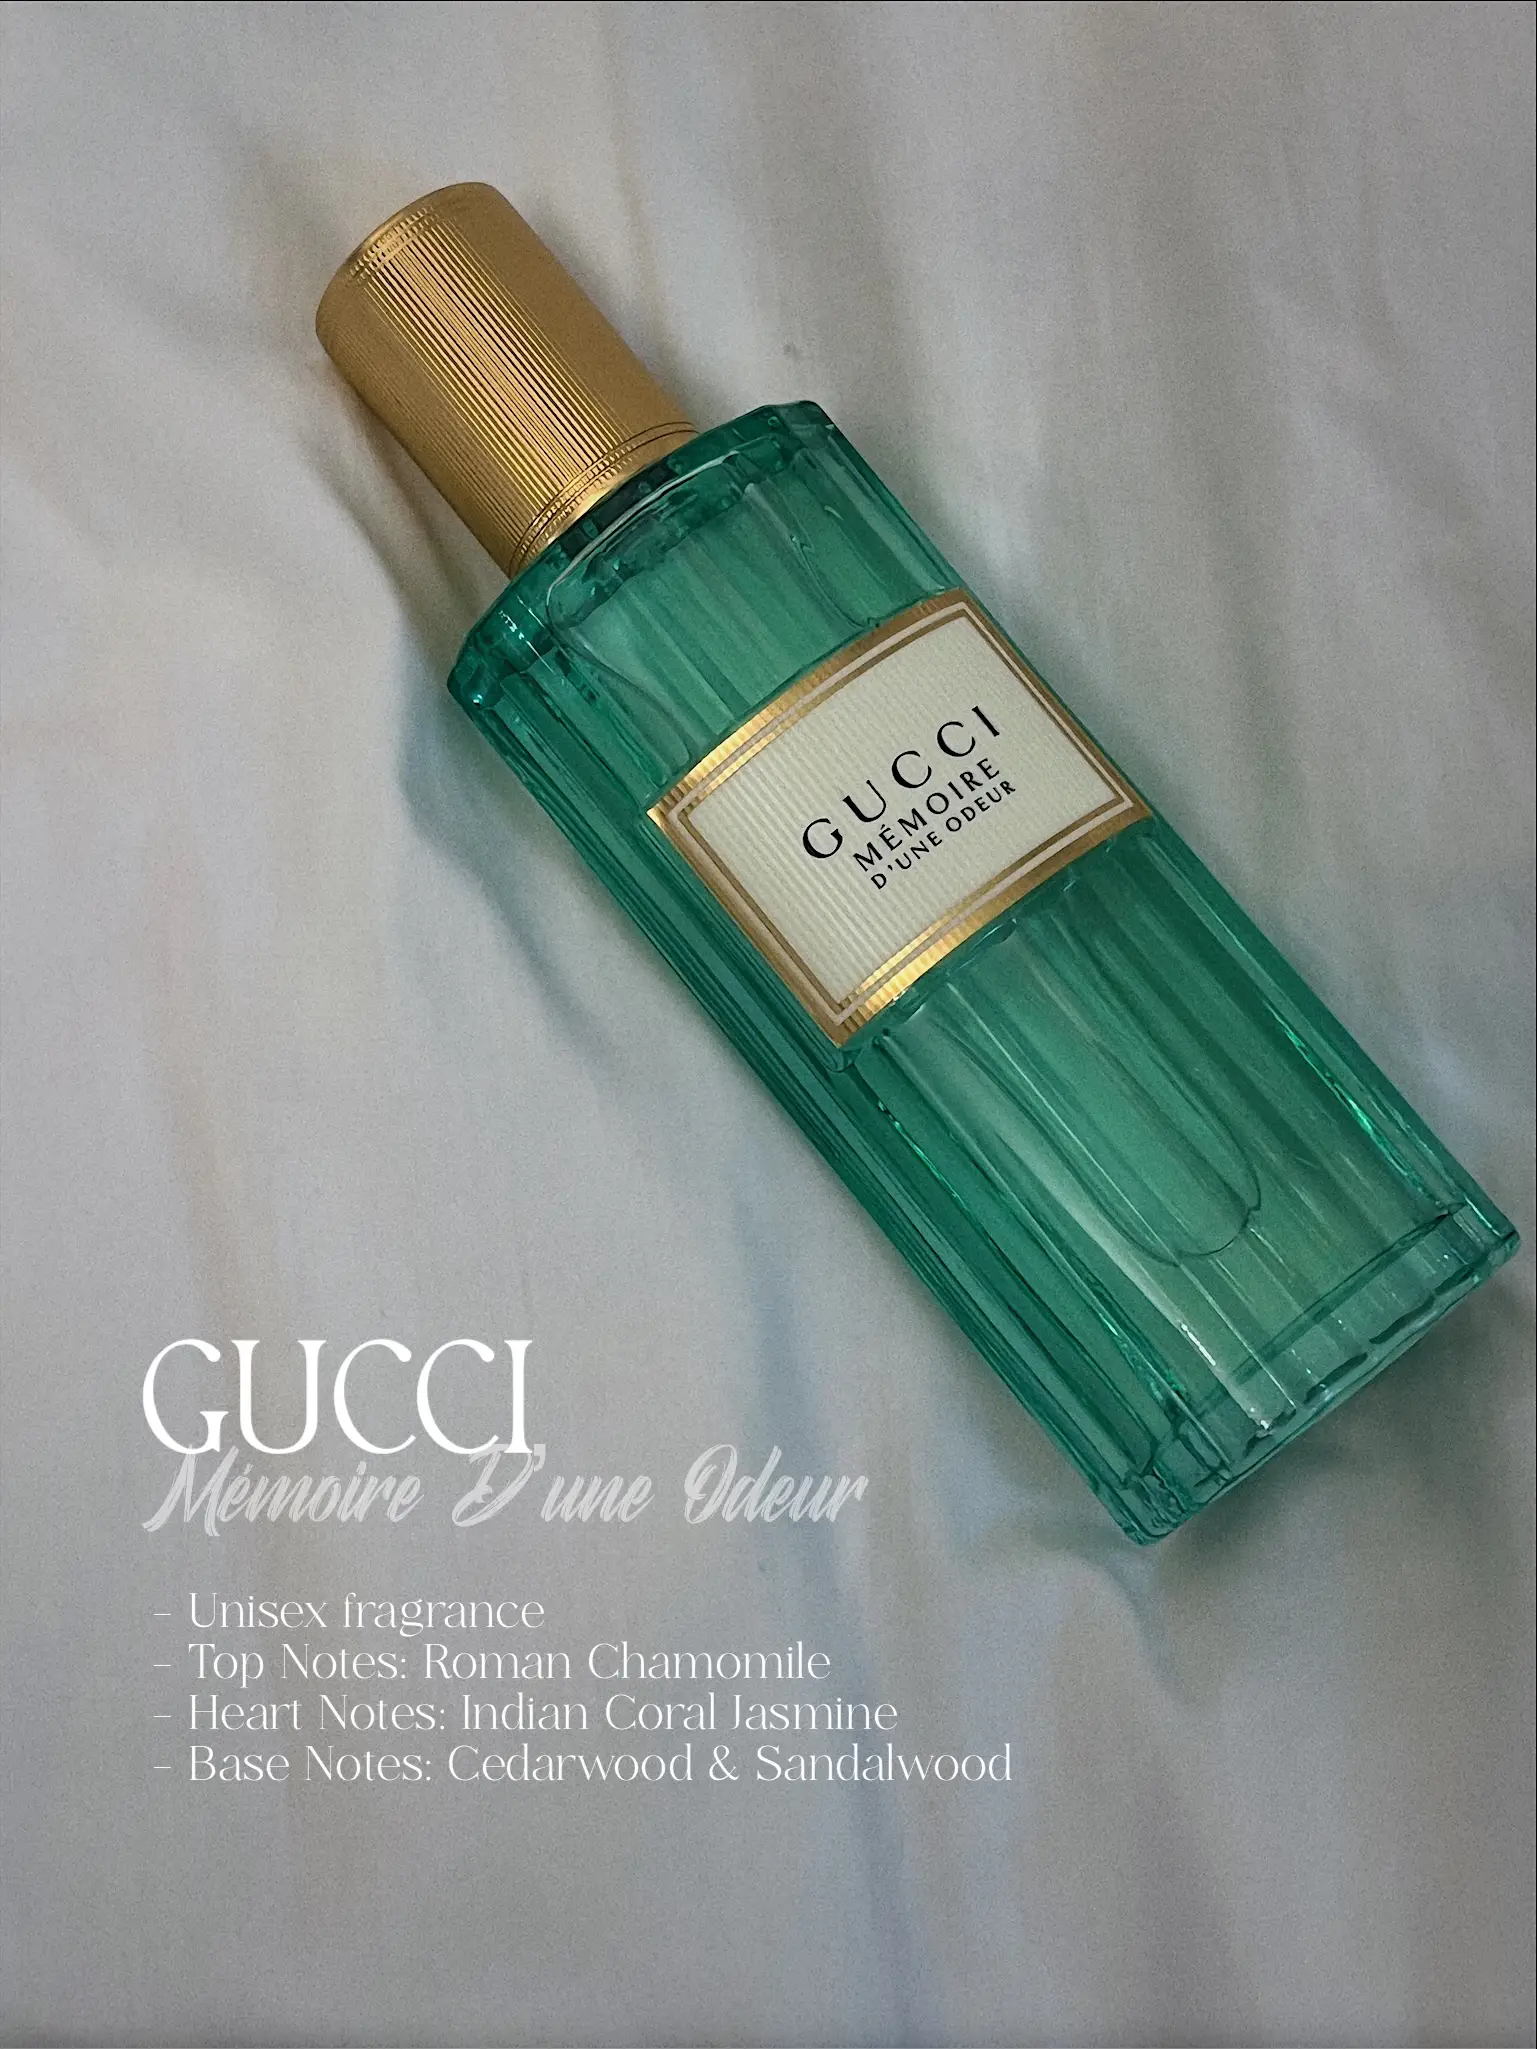 Louis Vuitton LV Perfume Cosmic Cloud Edp 100ml, Beauty & Personal